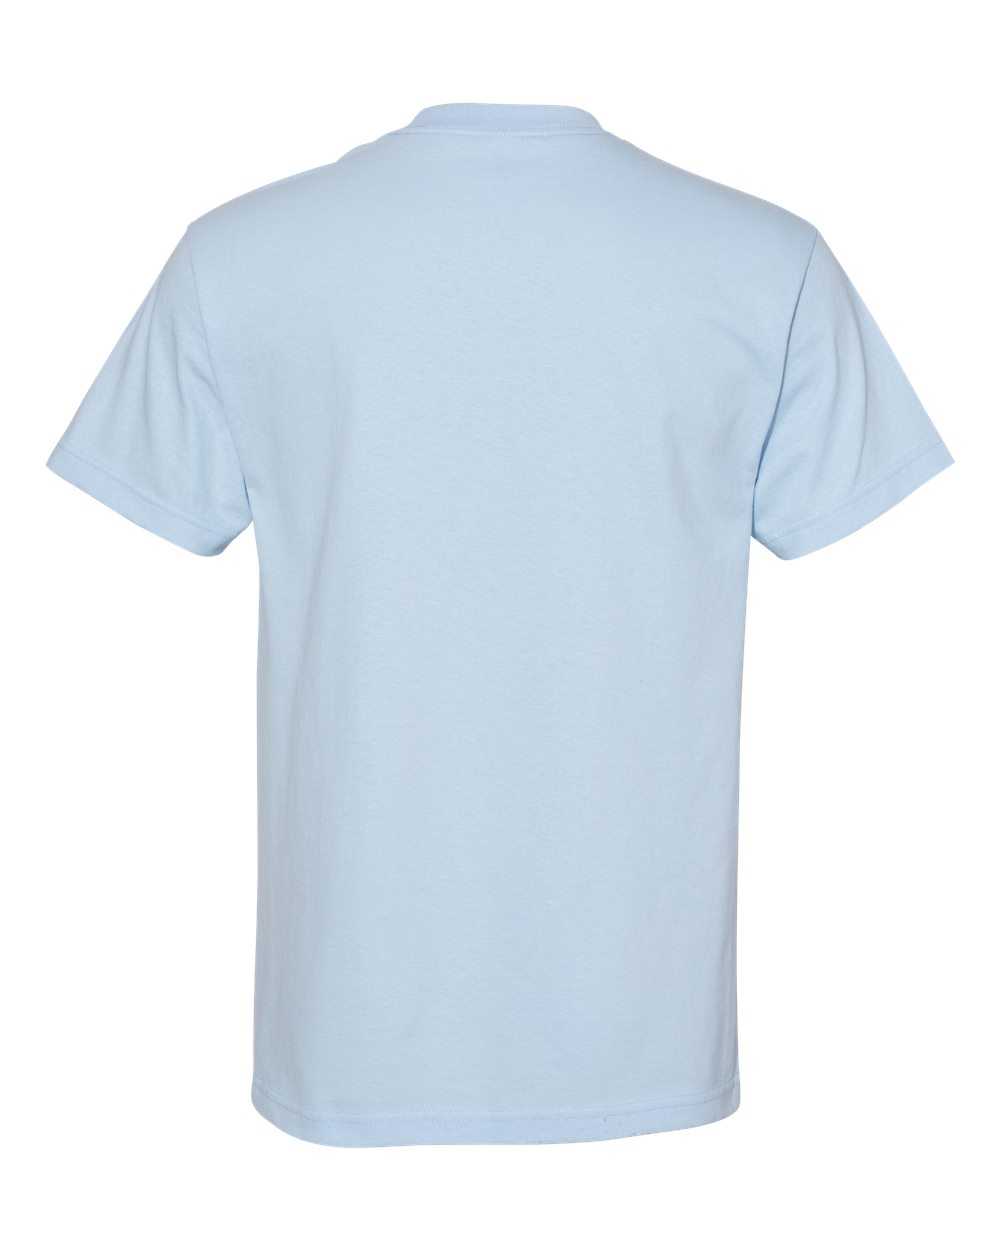 American Apparel 1301 Unisex Heavyweight Cotton T-Shirt - Powder Blue - HIT a Double